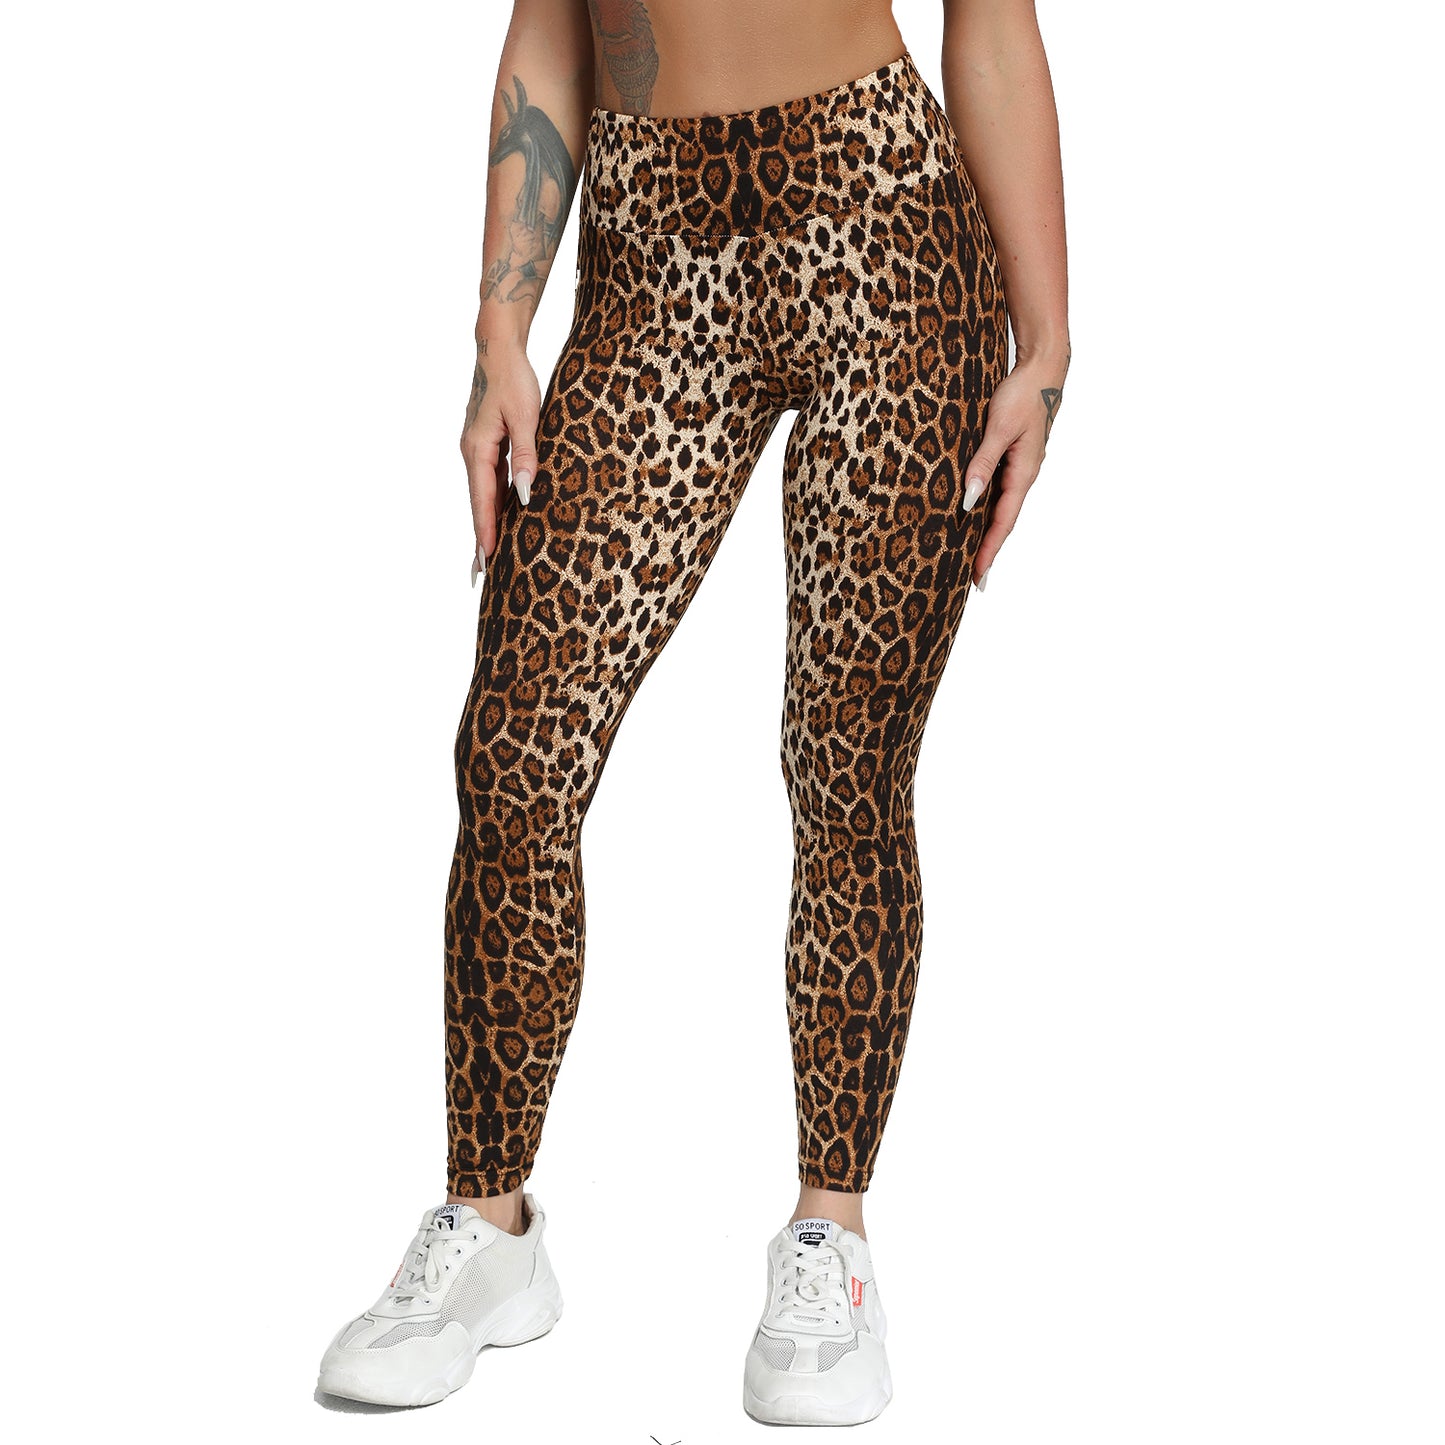 Fashion Snake Print Yoga Pants Elastic animal skin sports leggings Leopard Print Fitness Women pants High Waist gym sportswear